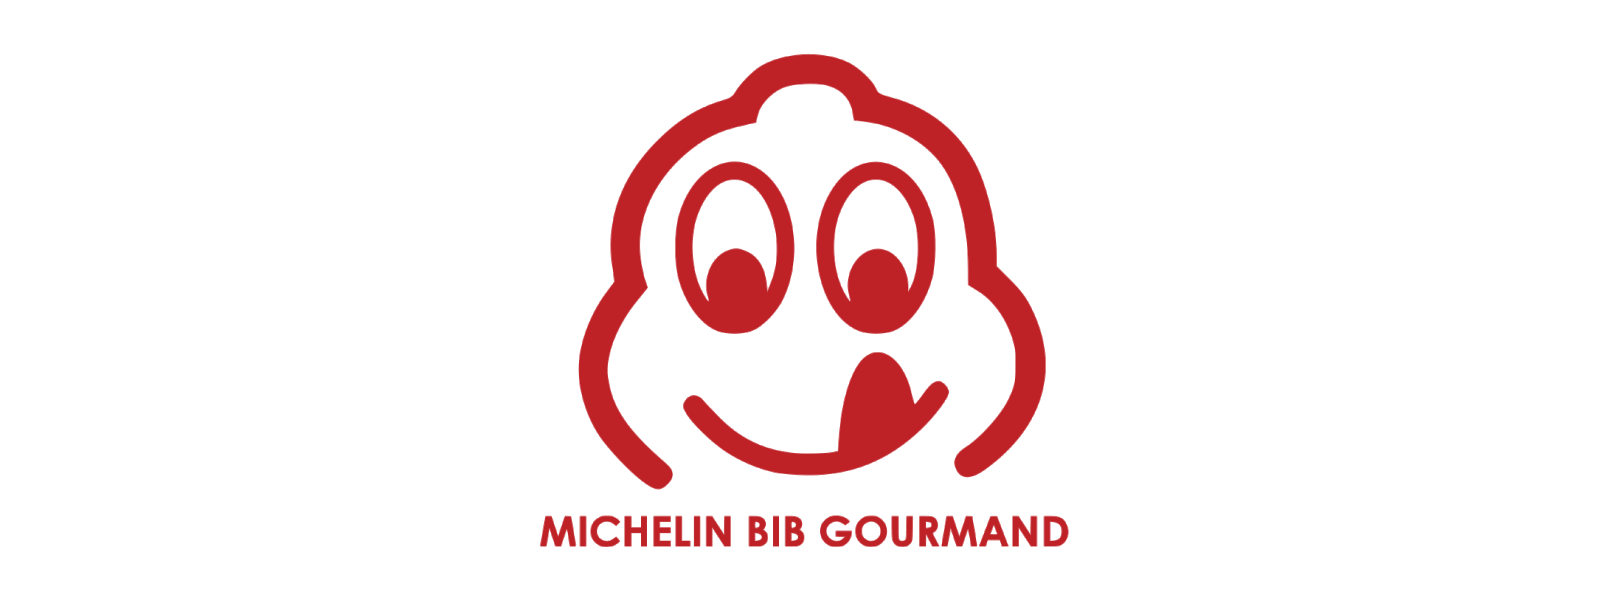 Michelin Bib gourmand